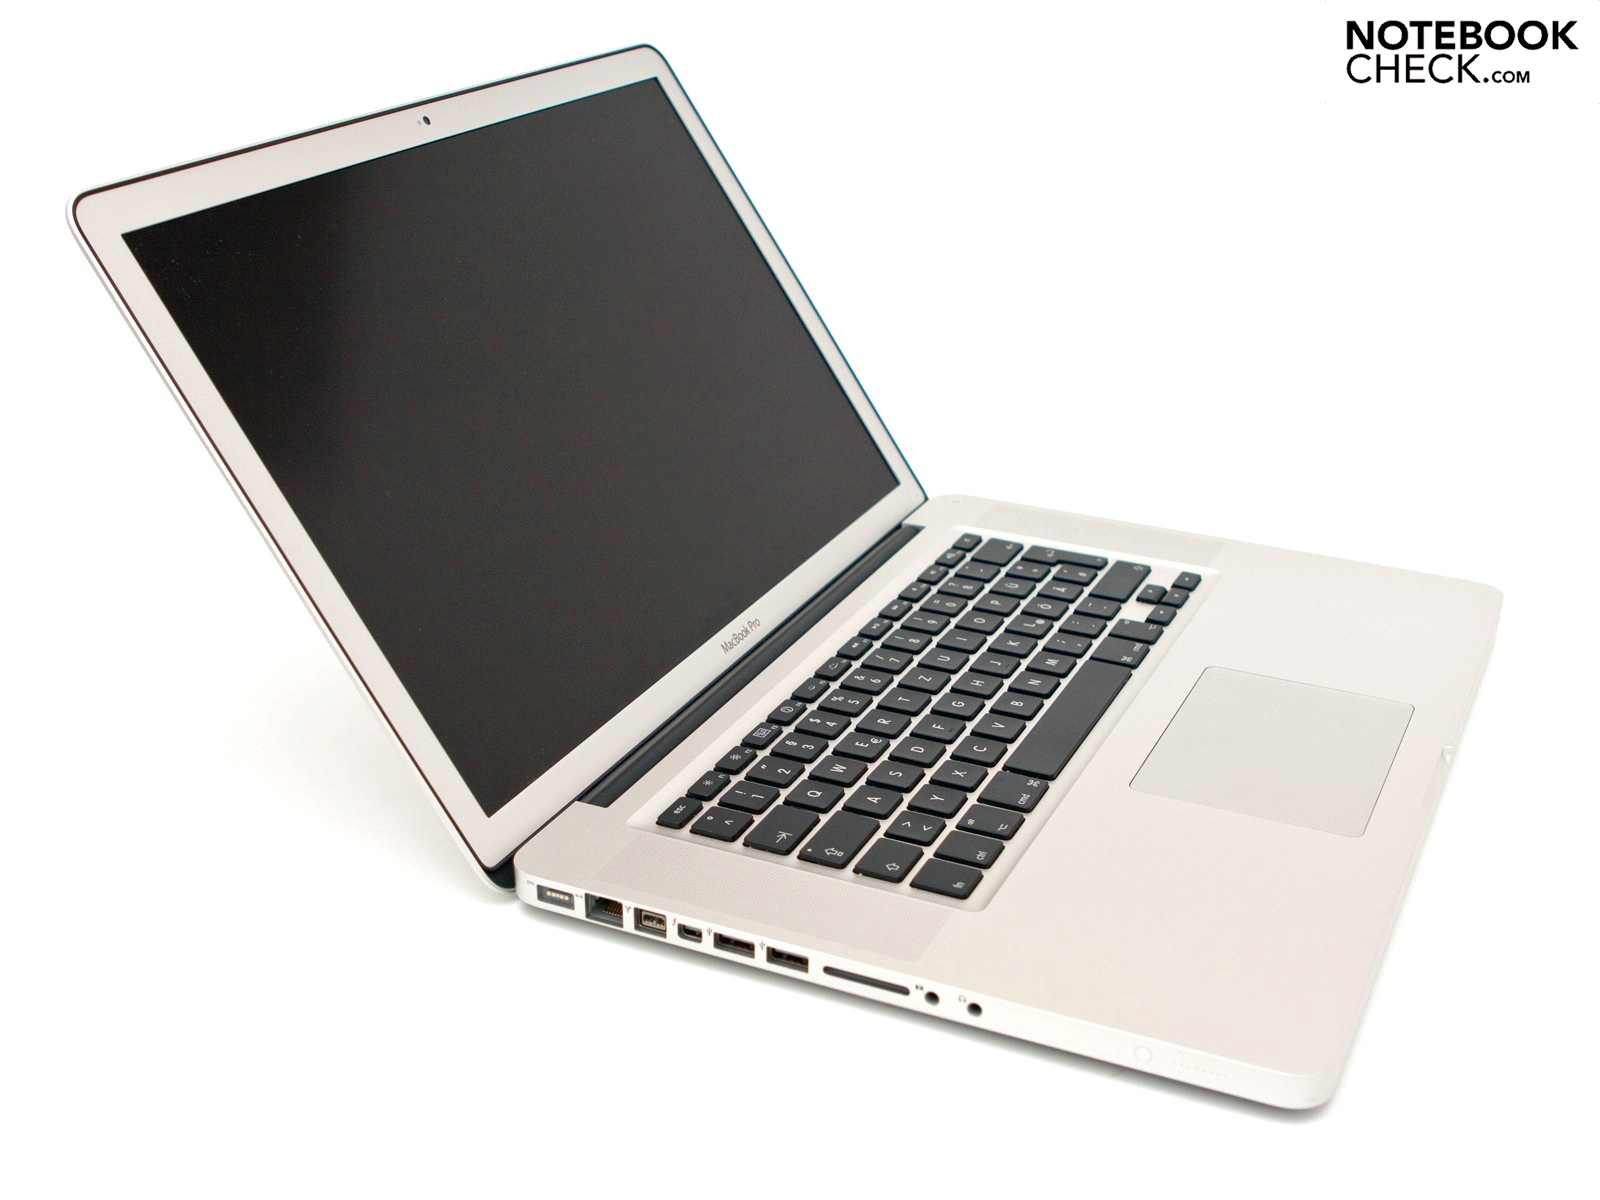 MacBook Pro 2011 late 15-inch